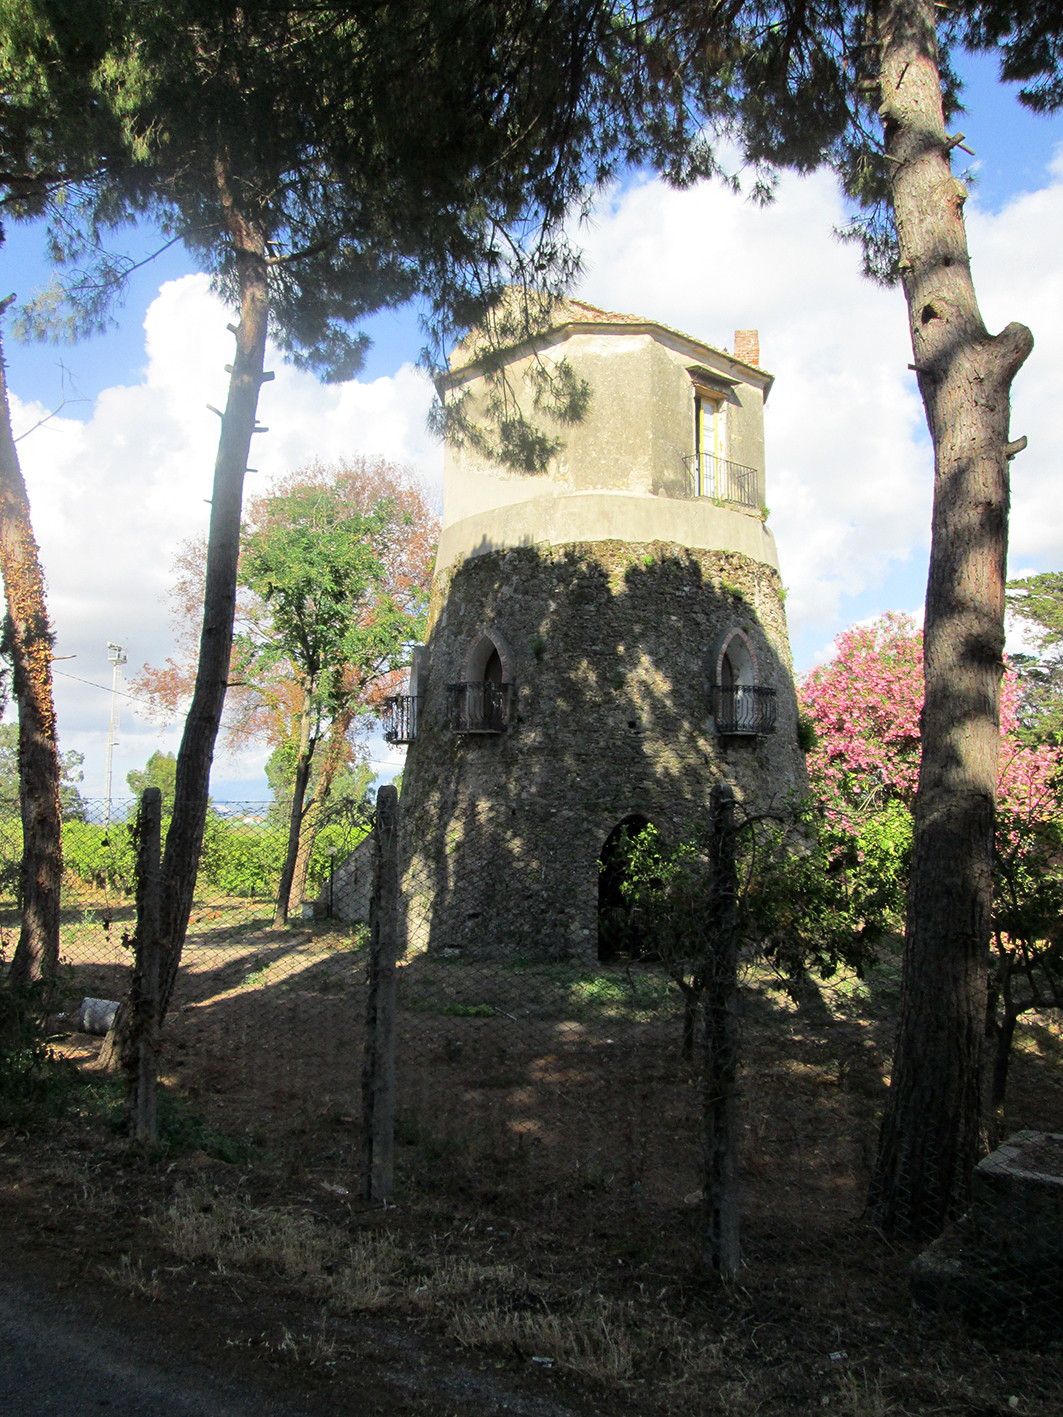 Torre costiera Foce Sele (torre, di avvistamento) - Capaccio Paestum (SA) 